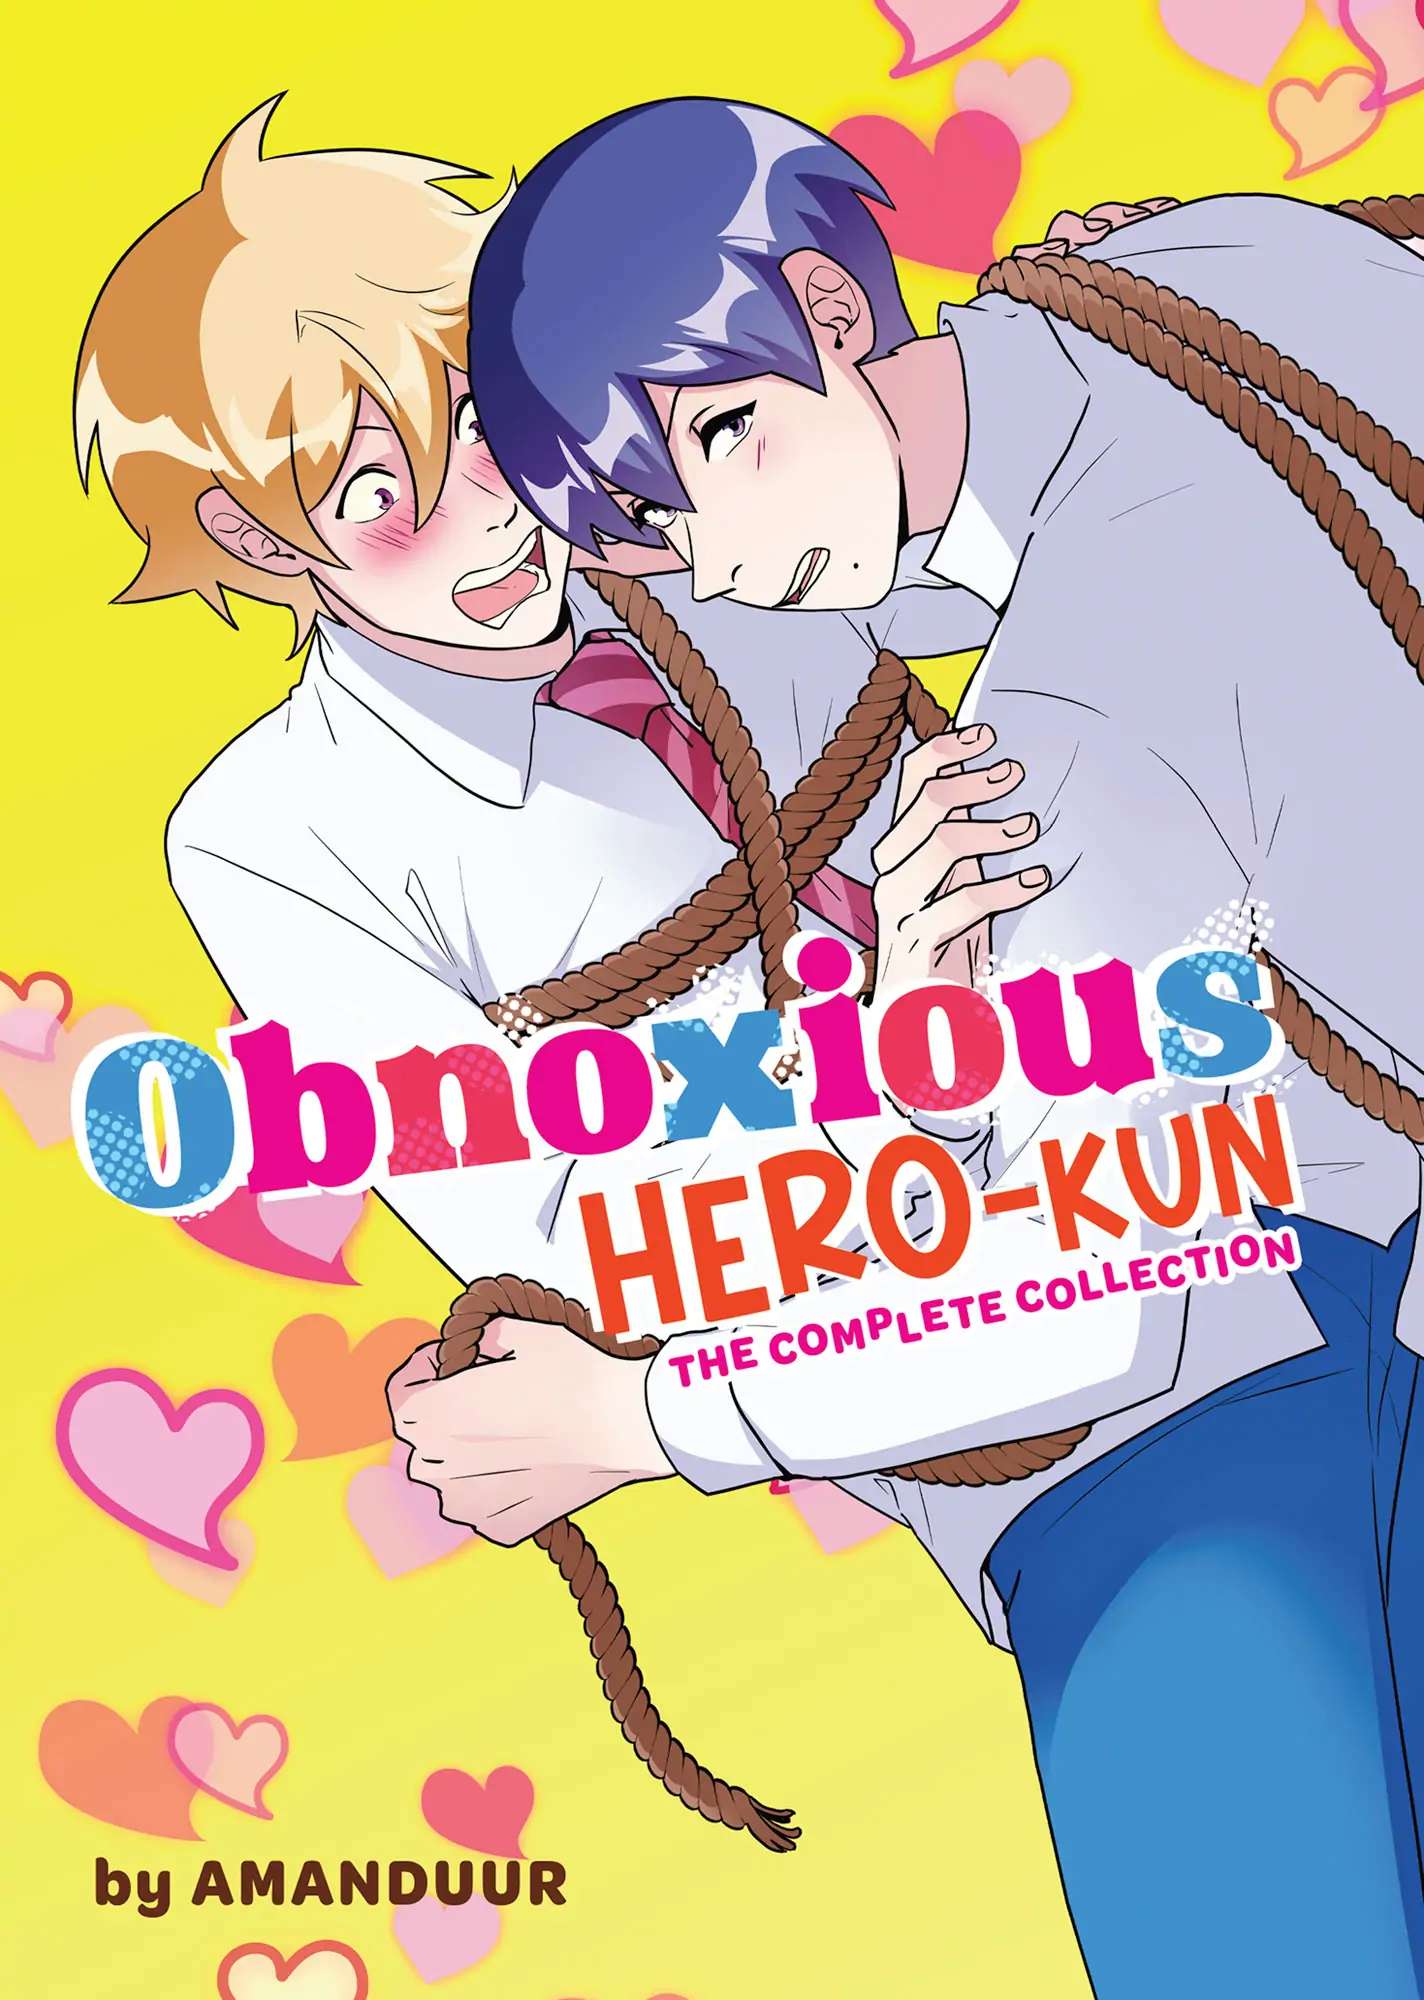 Obnoxious Hero-Kun - Page 1